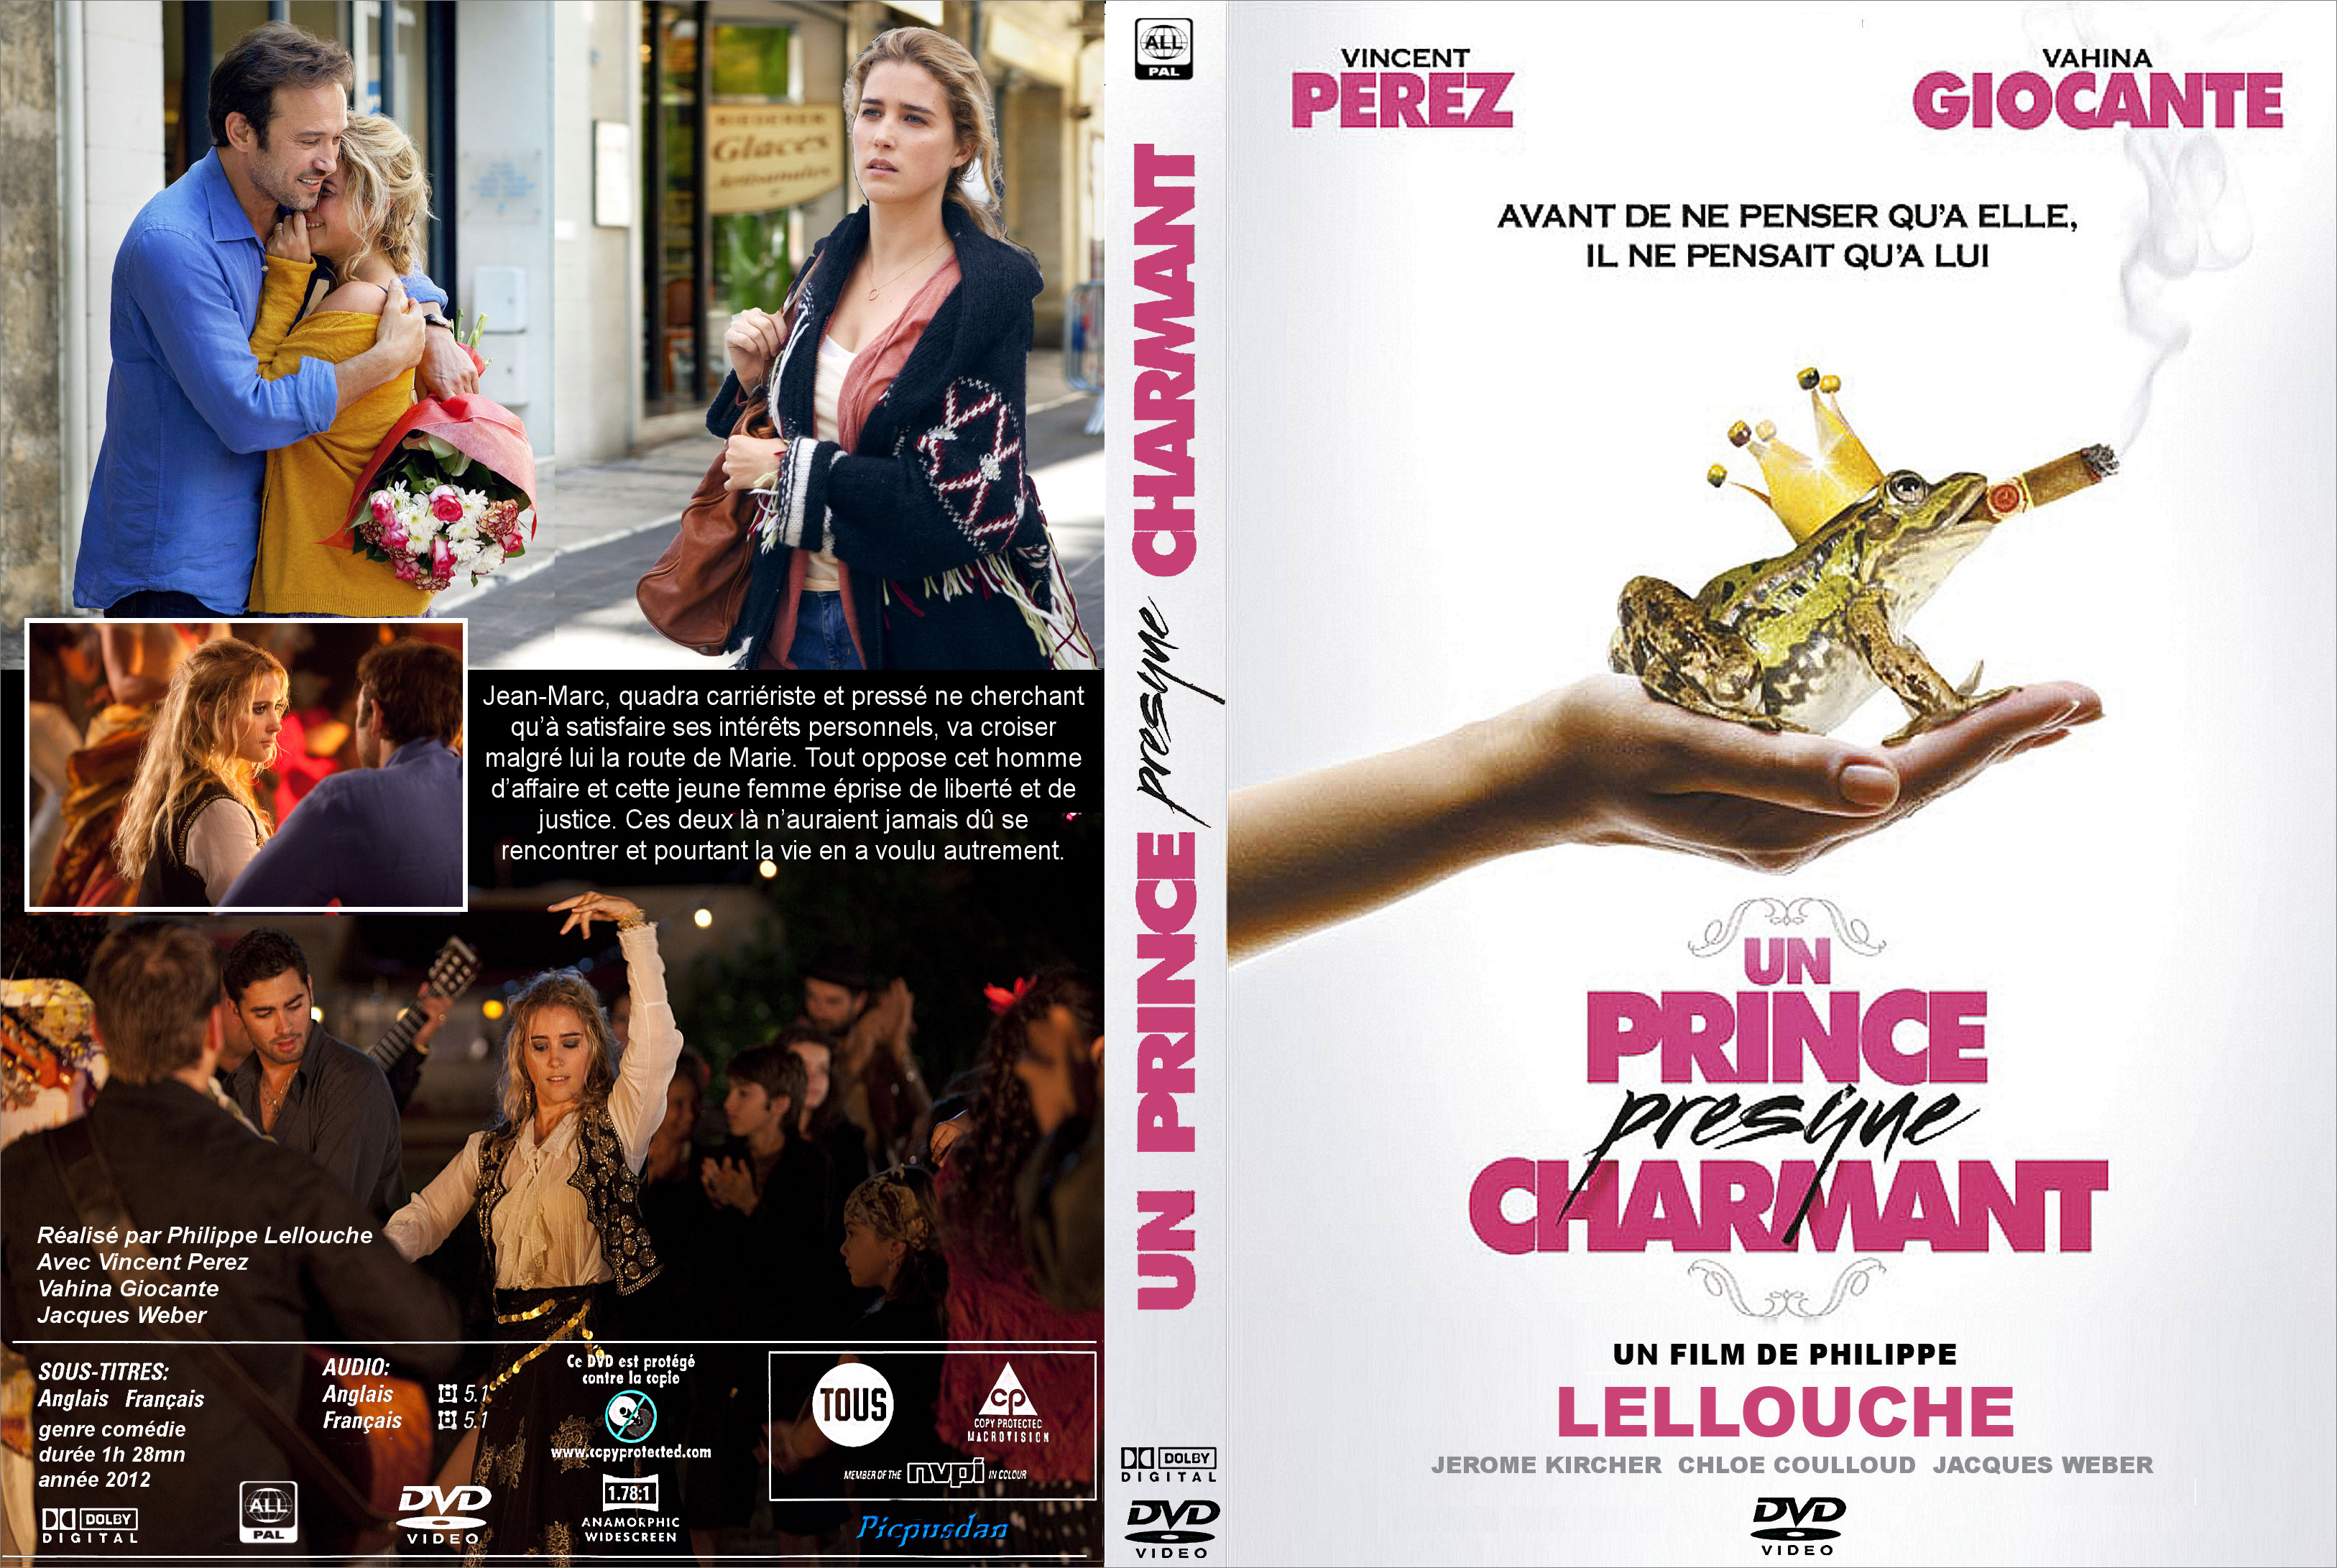 Jaquette DVD Un Prince (presque) charmant custom